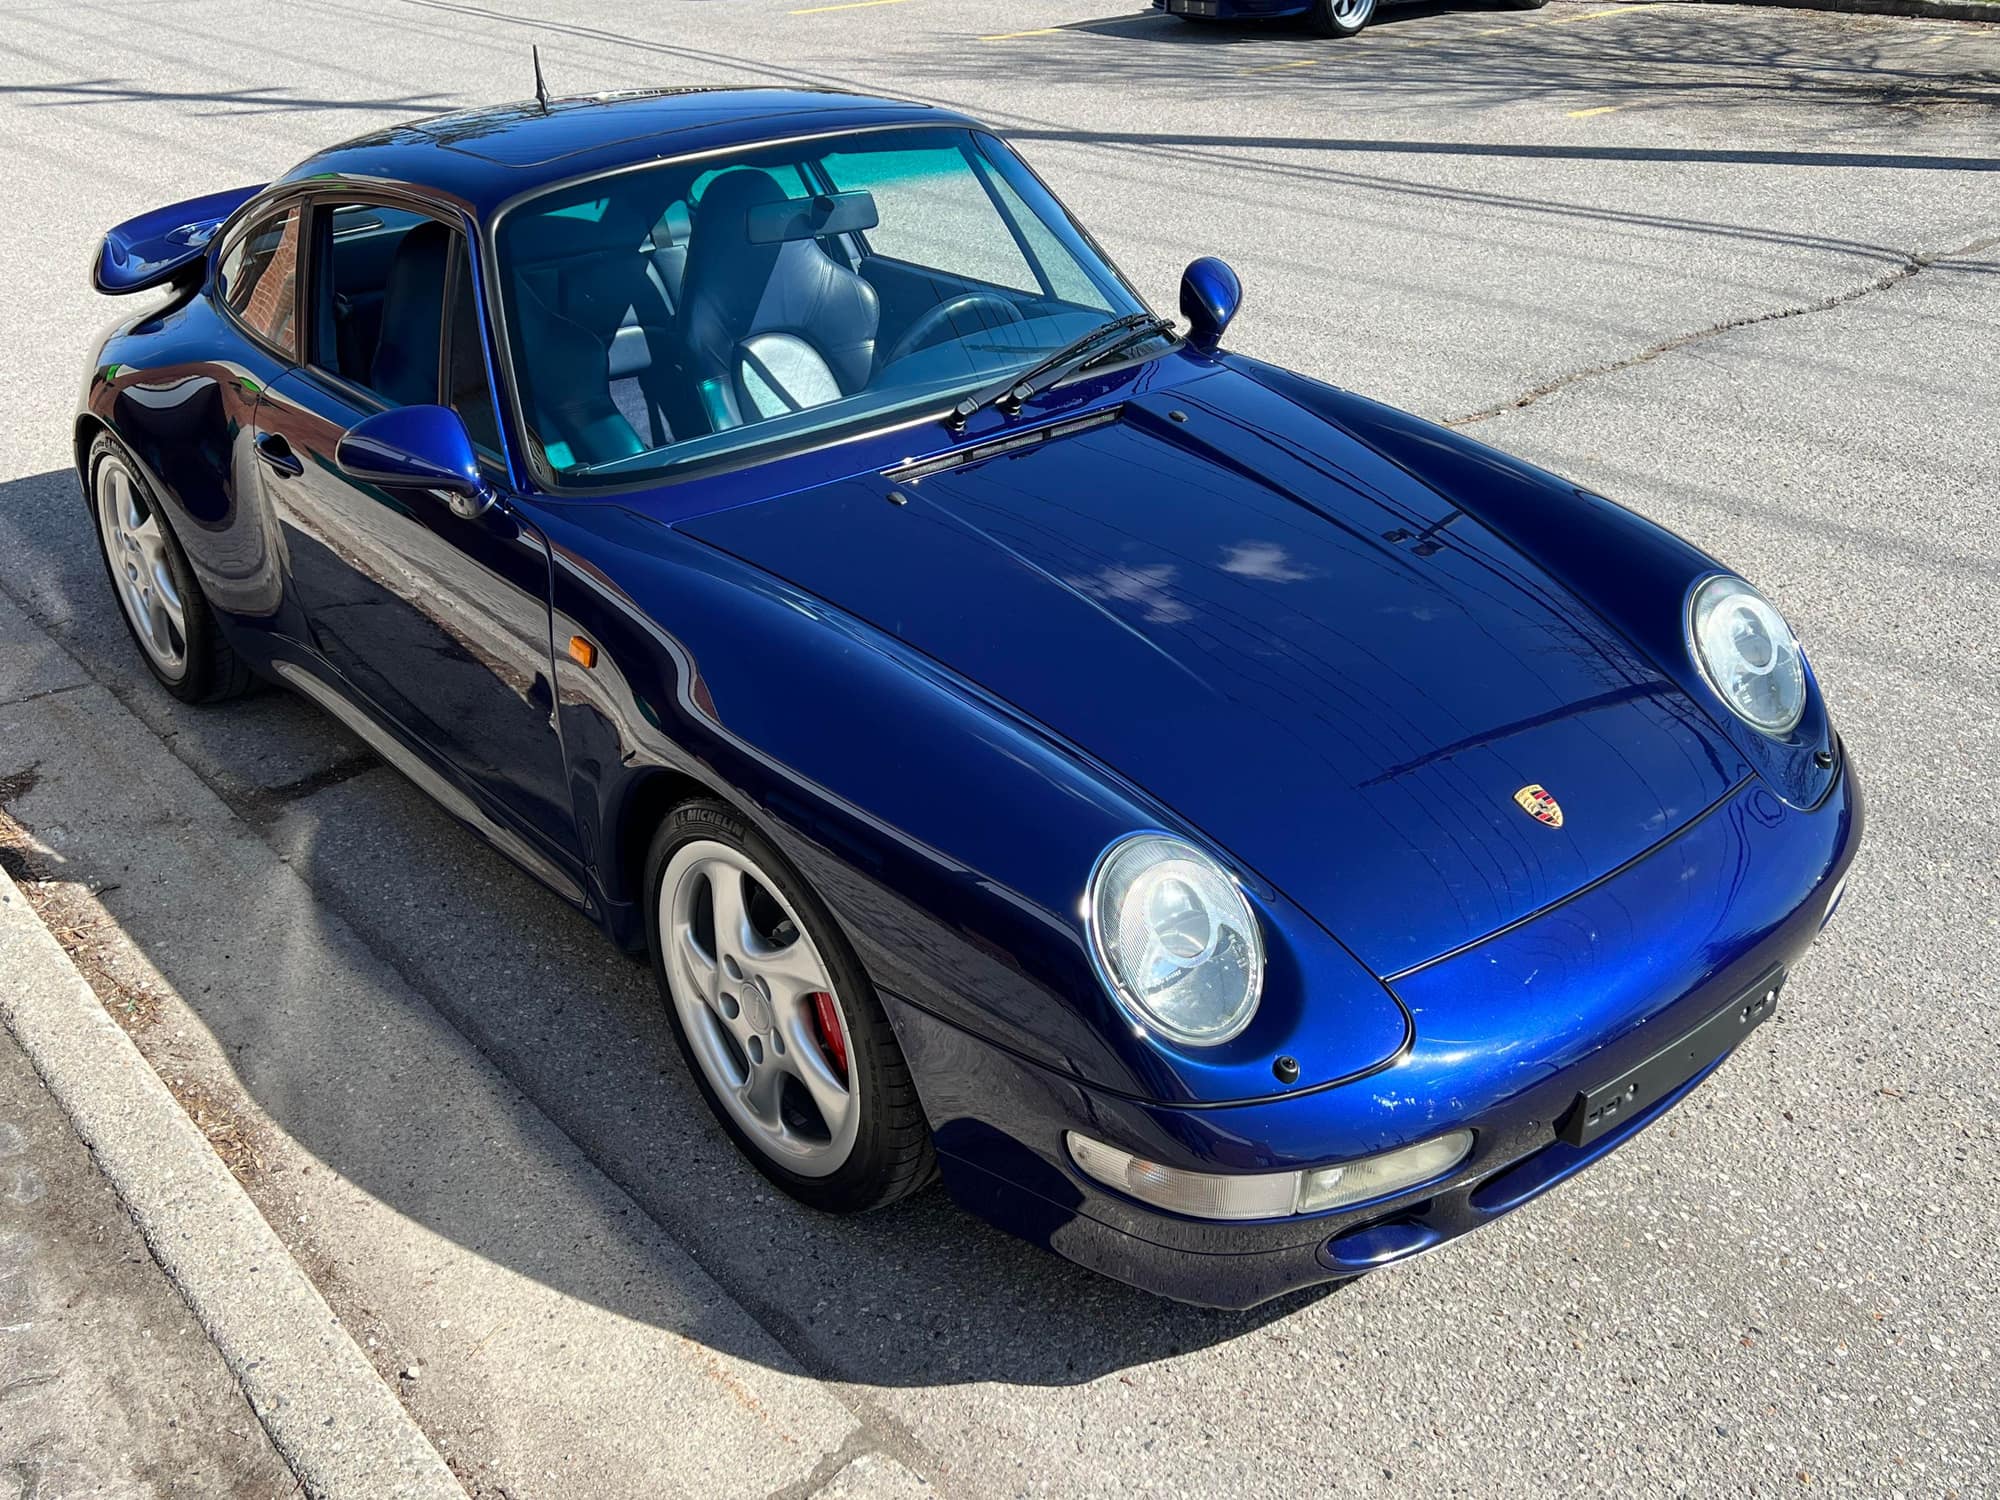 1996 Porsche 911 - 1996 Porsche 993 Turbo - 43k miles, X50 Powerkit, Iris Blue - Used - VIN WP0ZZZ99ZTS372253 - 43,850 Miles - 6 cyl - AWD - Manual - Coupe - Blue - Detroit, MI 48236, United States